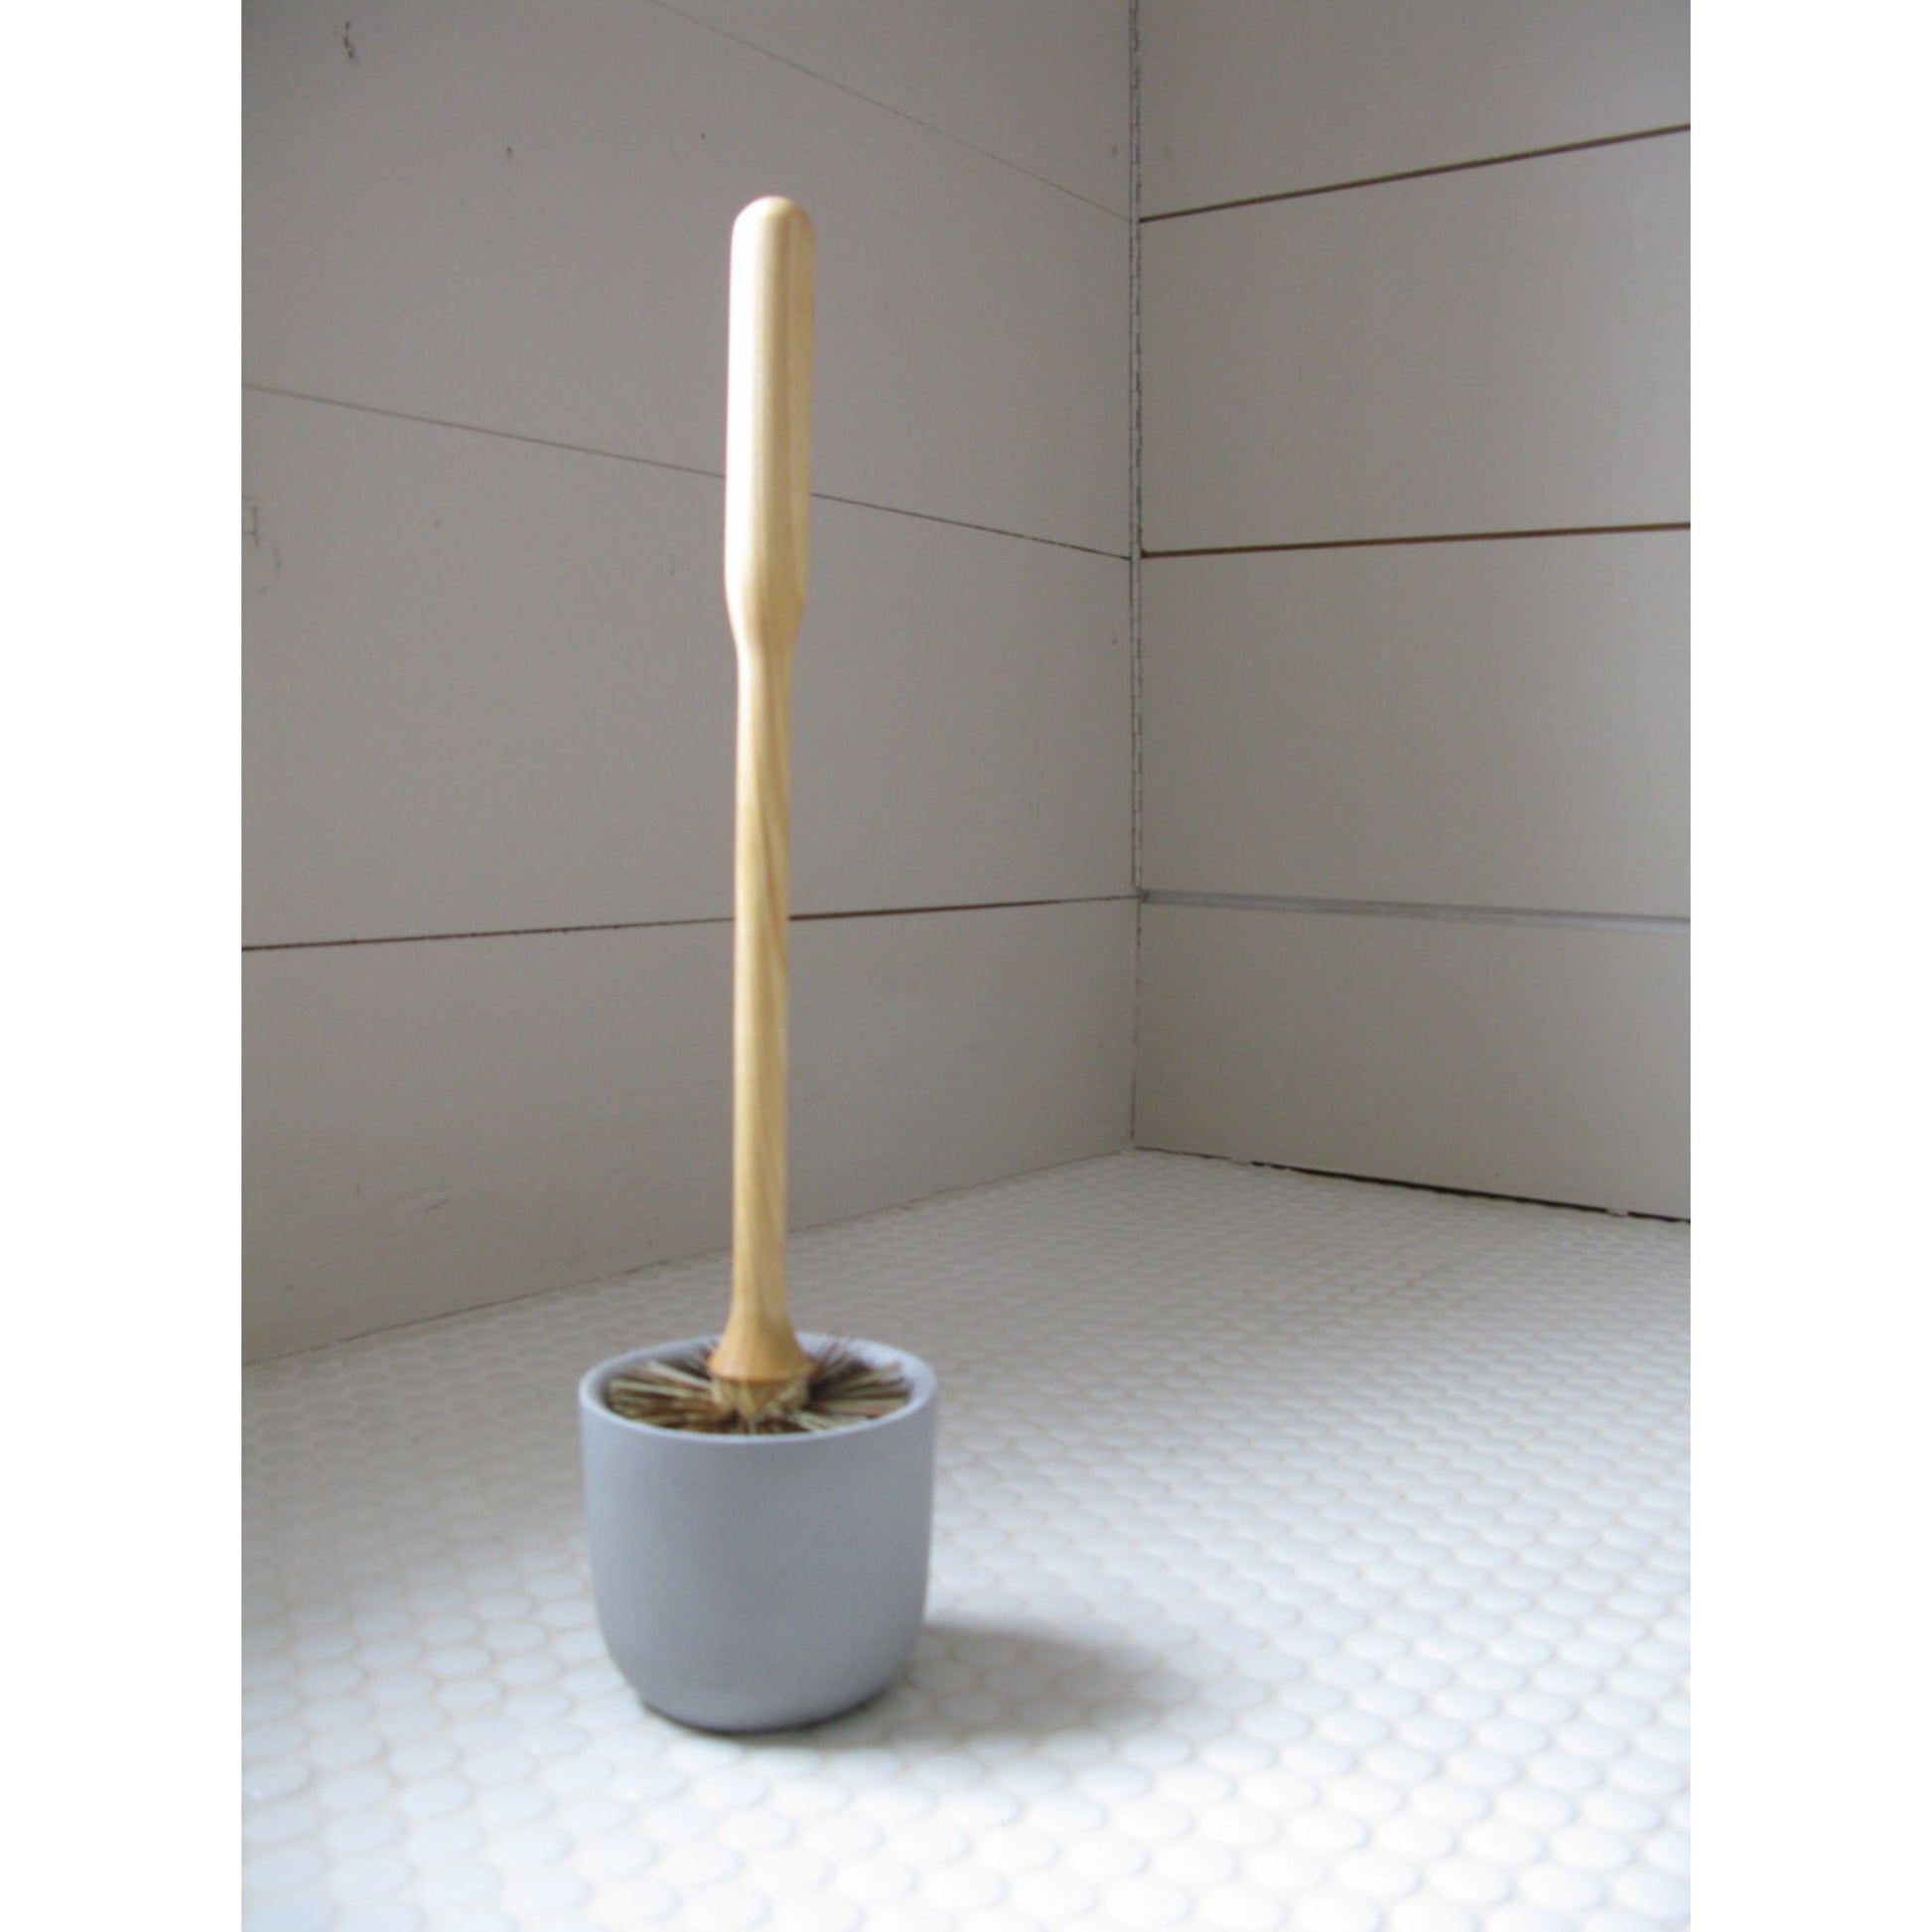 wood toilet brush concrete cup by iris hantverk